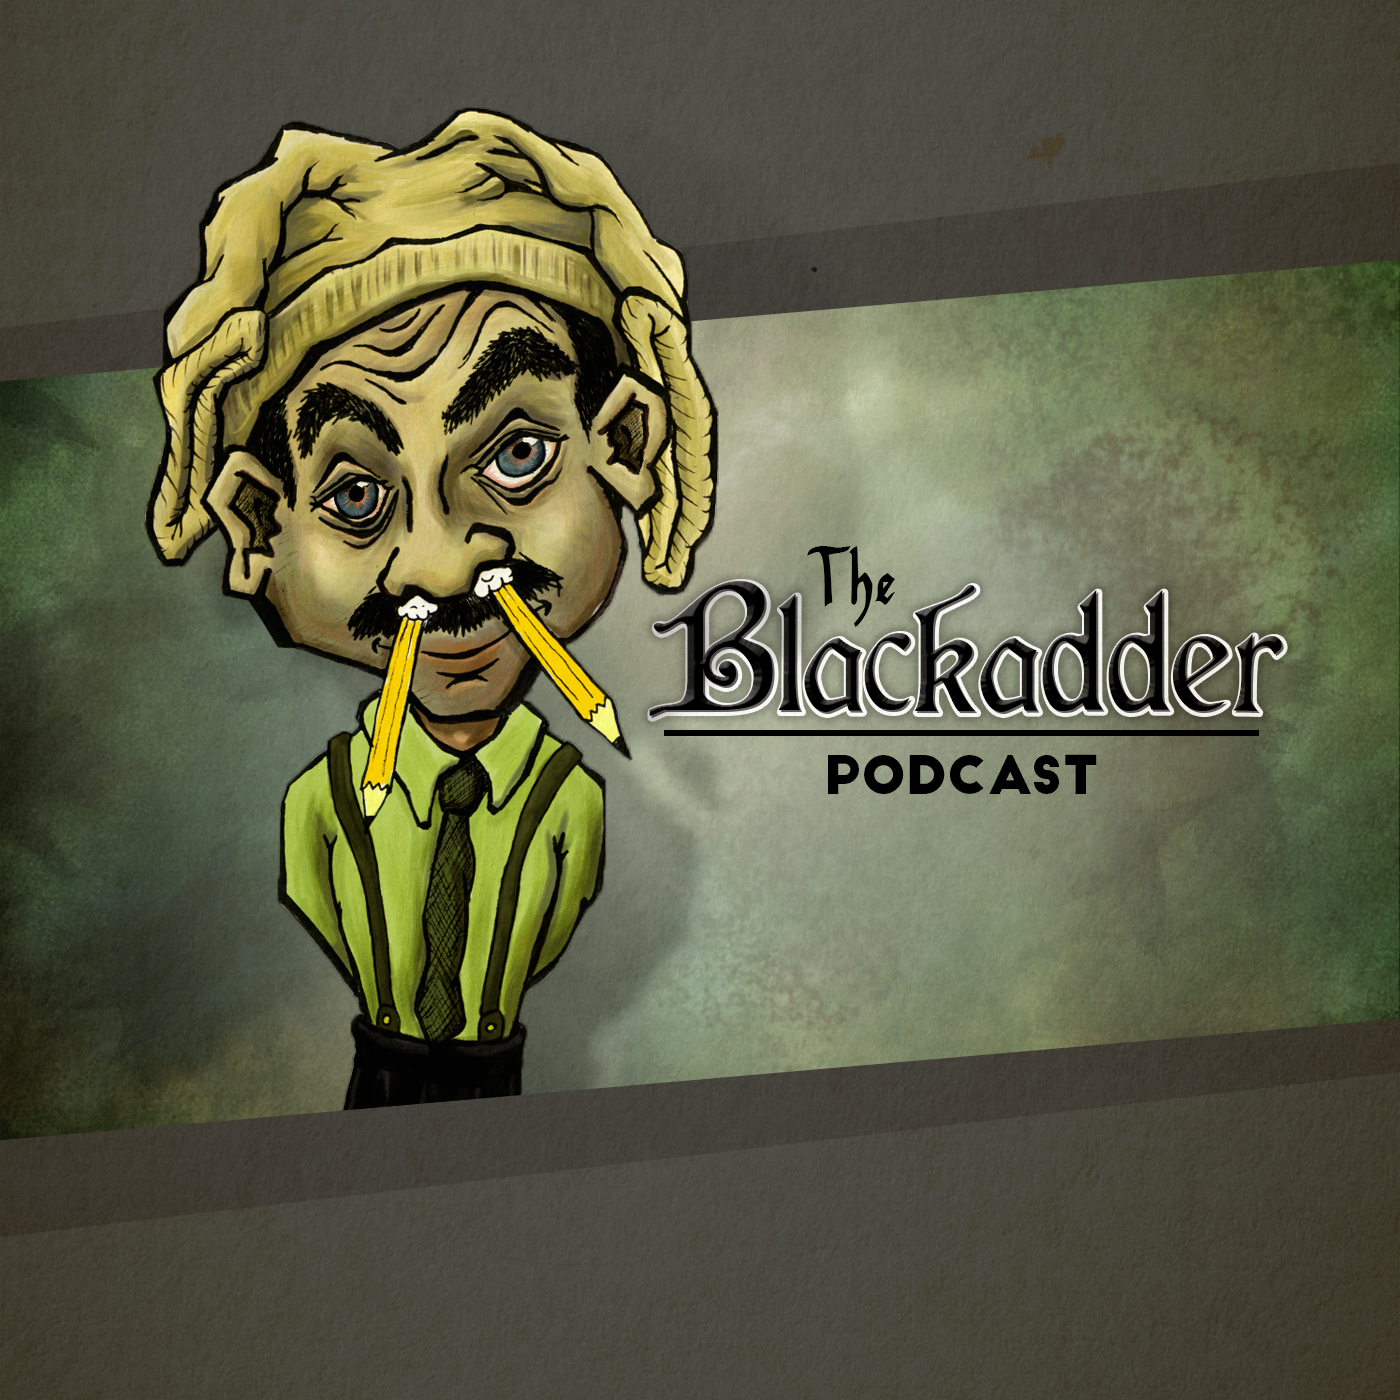 The Blackadder Podcast